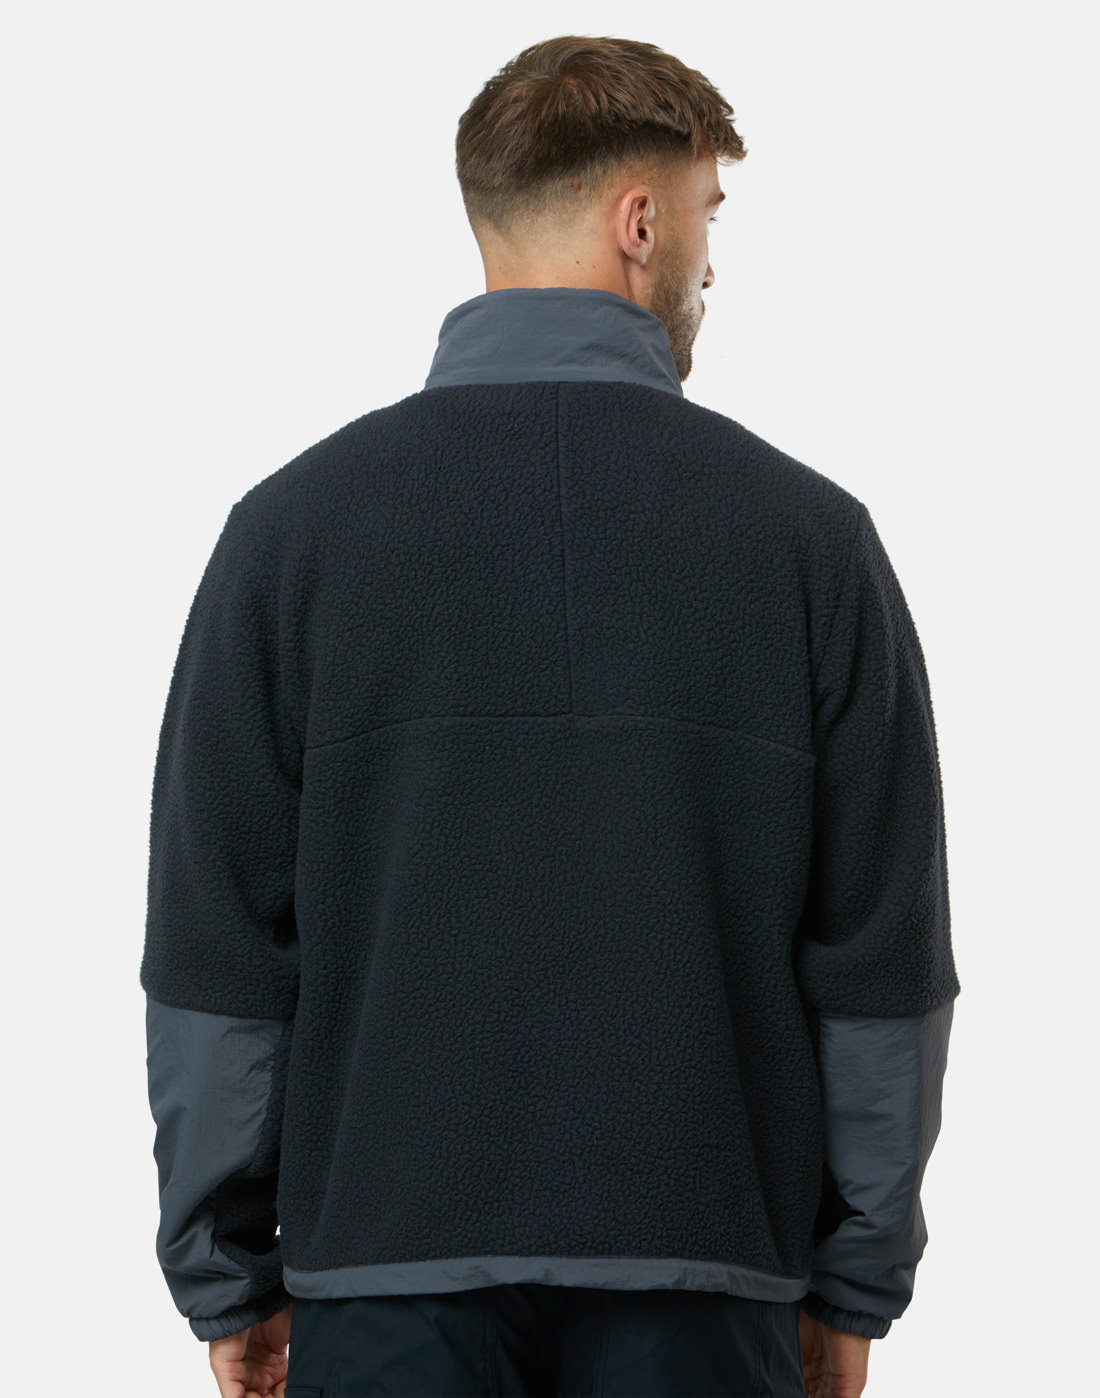 Berghaus Mens Oversized Fleece Half Zip Top - Black | Life Style Sports IE